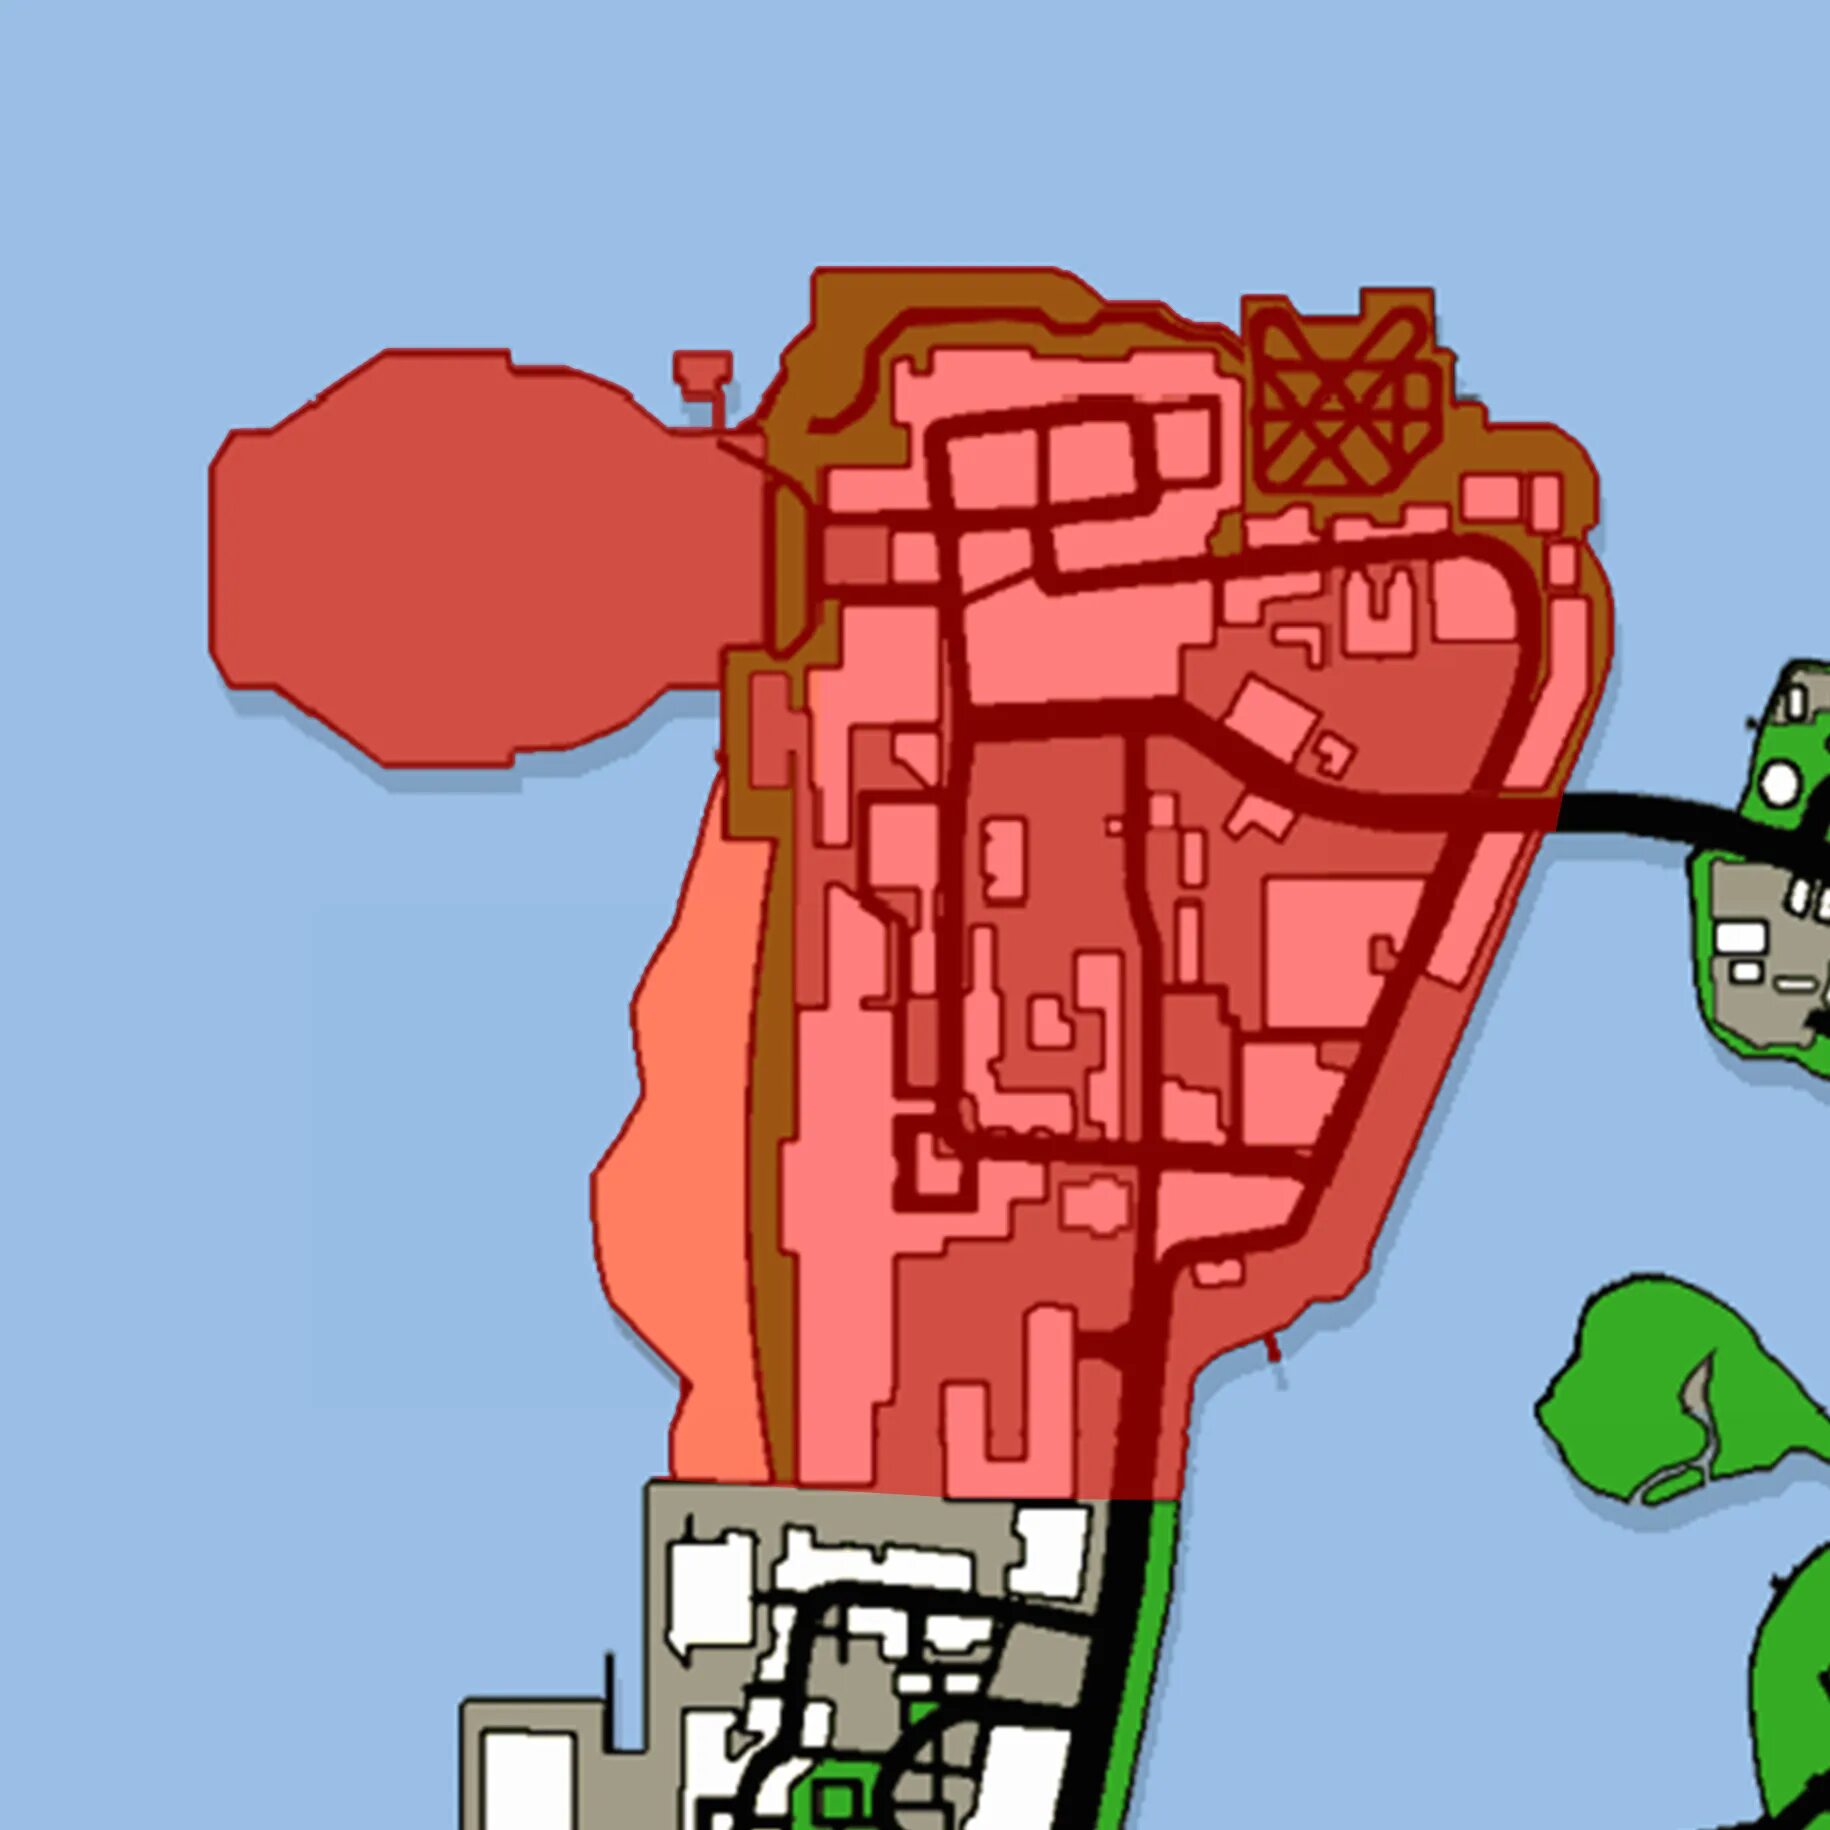 Купить гта вайс сити. Downtown GTA VC. Vice City карта недвижимости. Деловой район Вайс Сити. Карта Вайс Сити с недвижимостью.